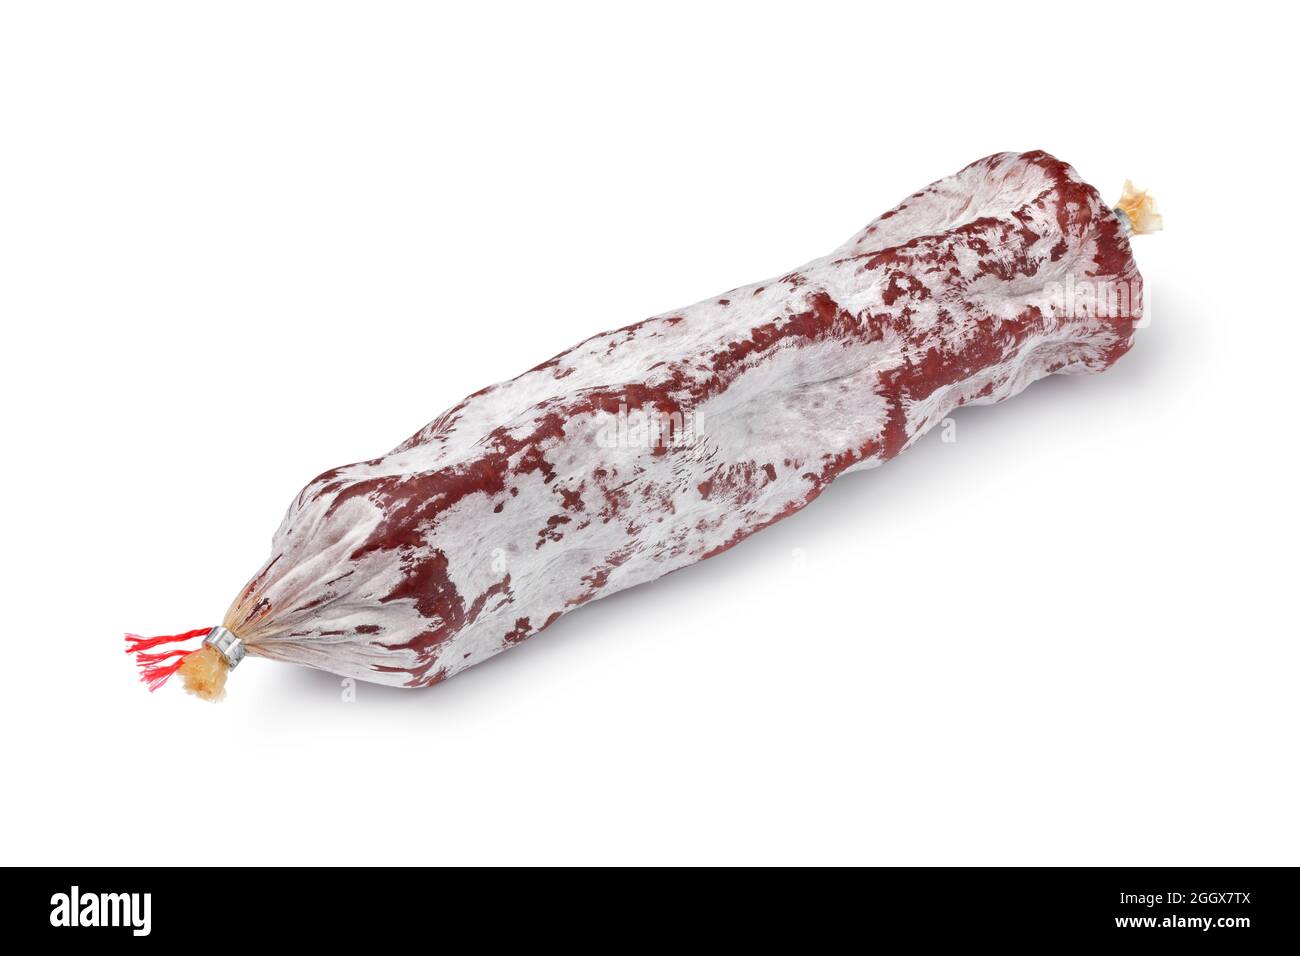 and photography sausage stock hi-res - images Alamy lyon Pork